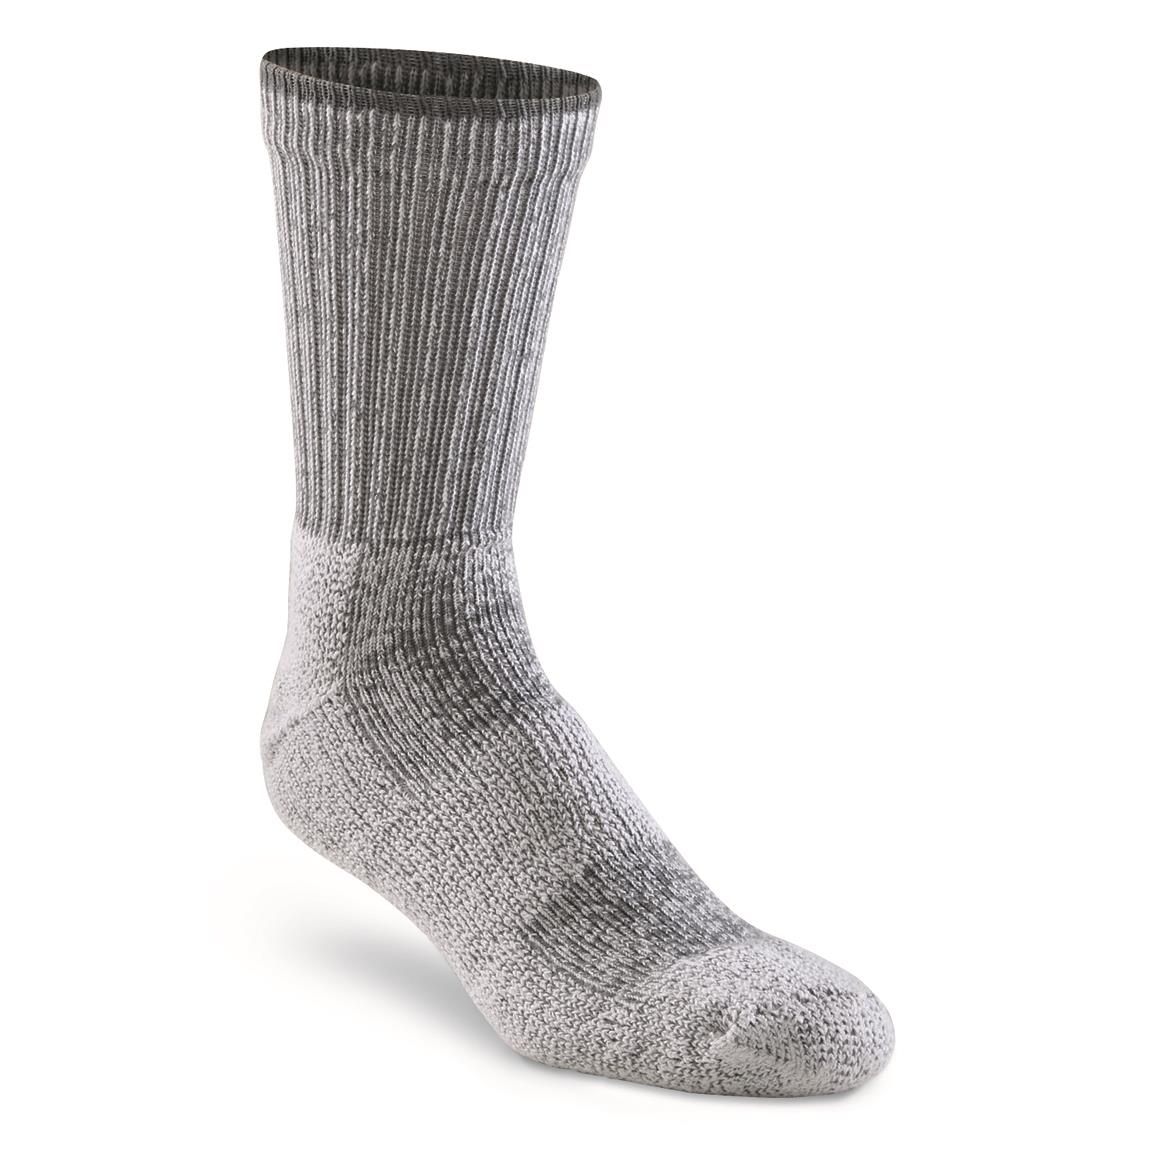 Fox River Men's Wick Dry Euro Crew Socks, 2 Pairs, Gray